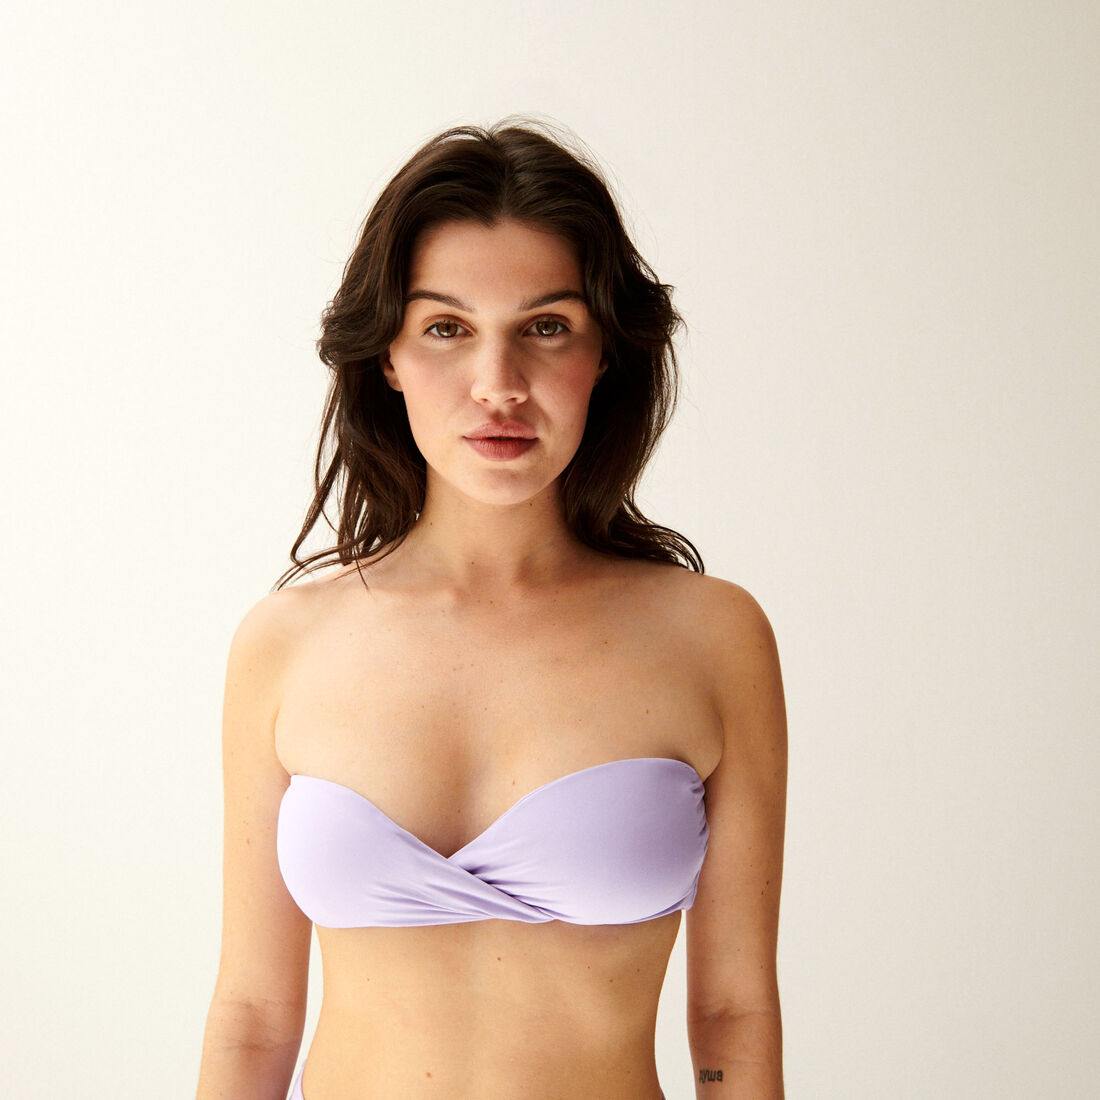 plain bandeau bikini top - lavender;